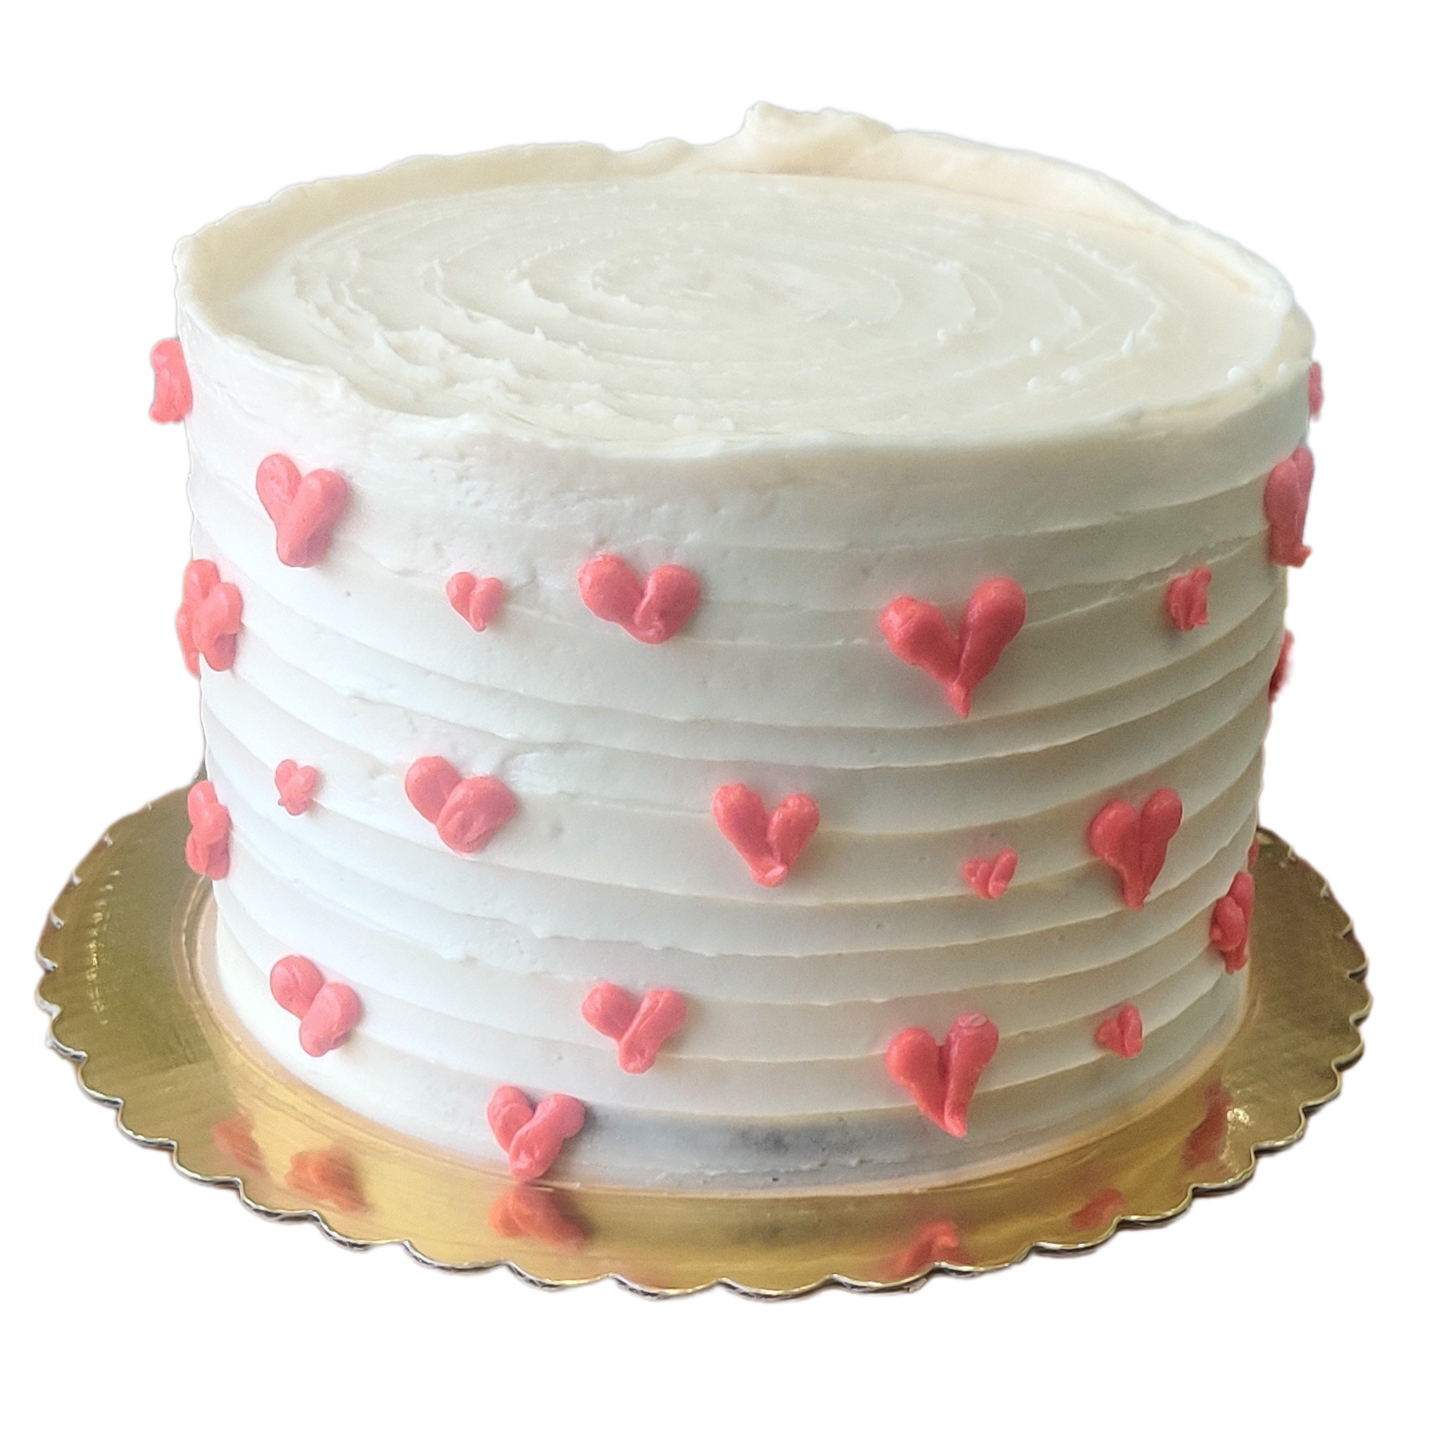 I Love You Cake